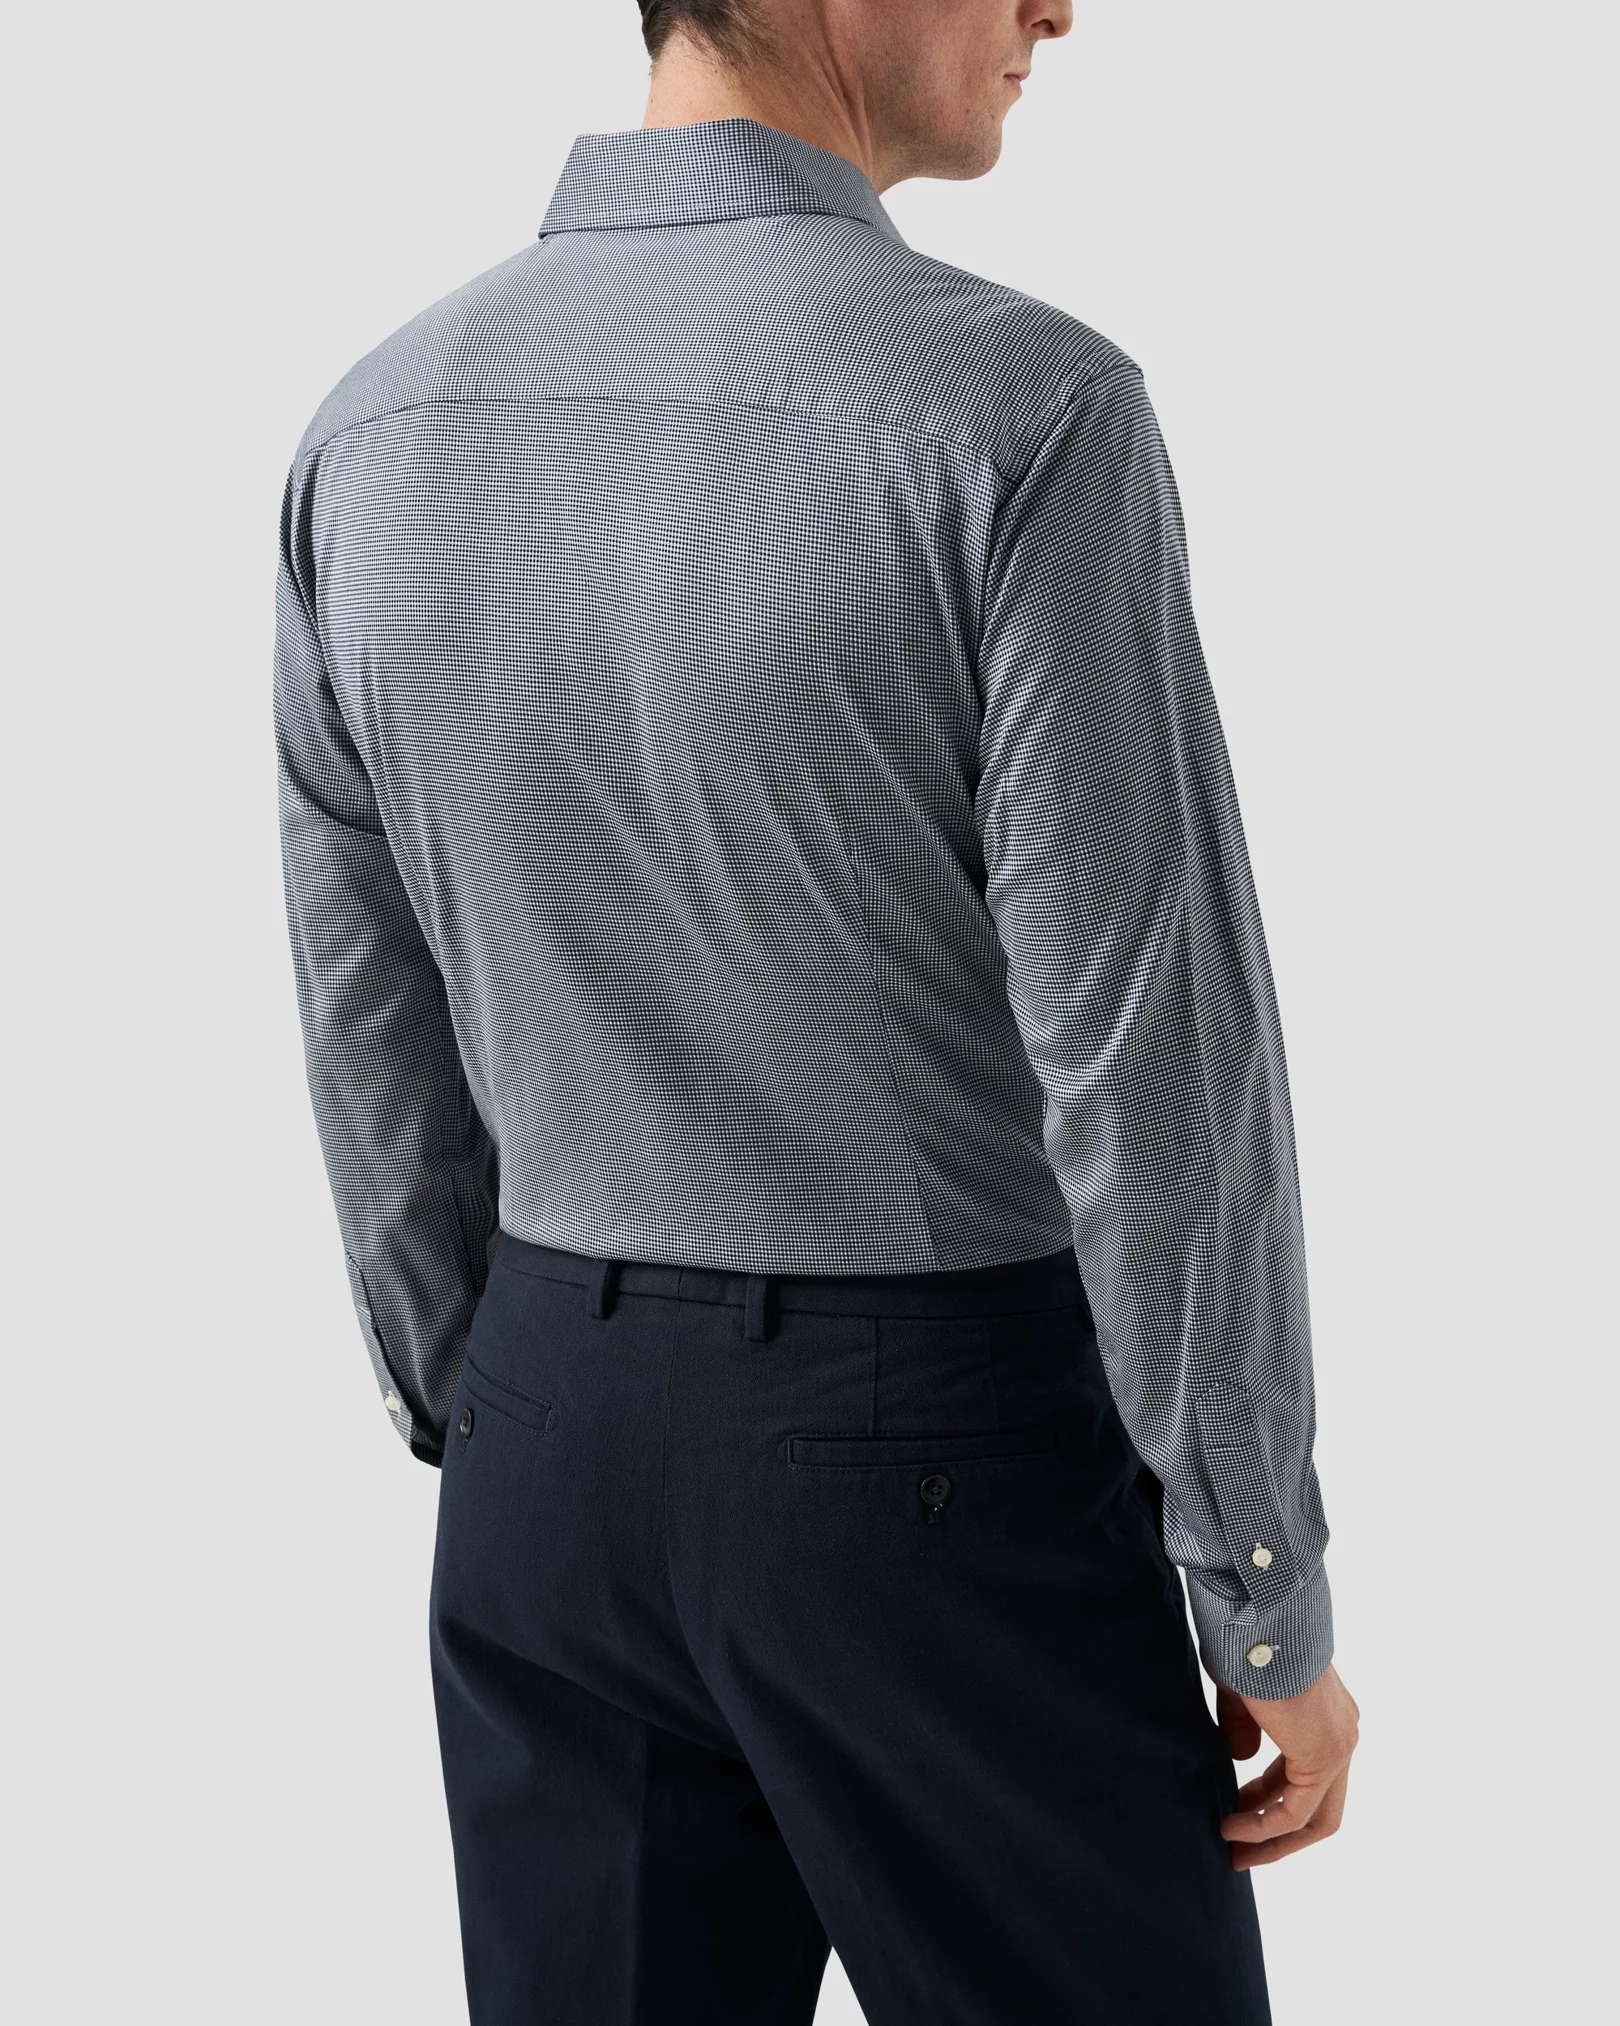 Eton - Navy Checked Knitted Shirt